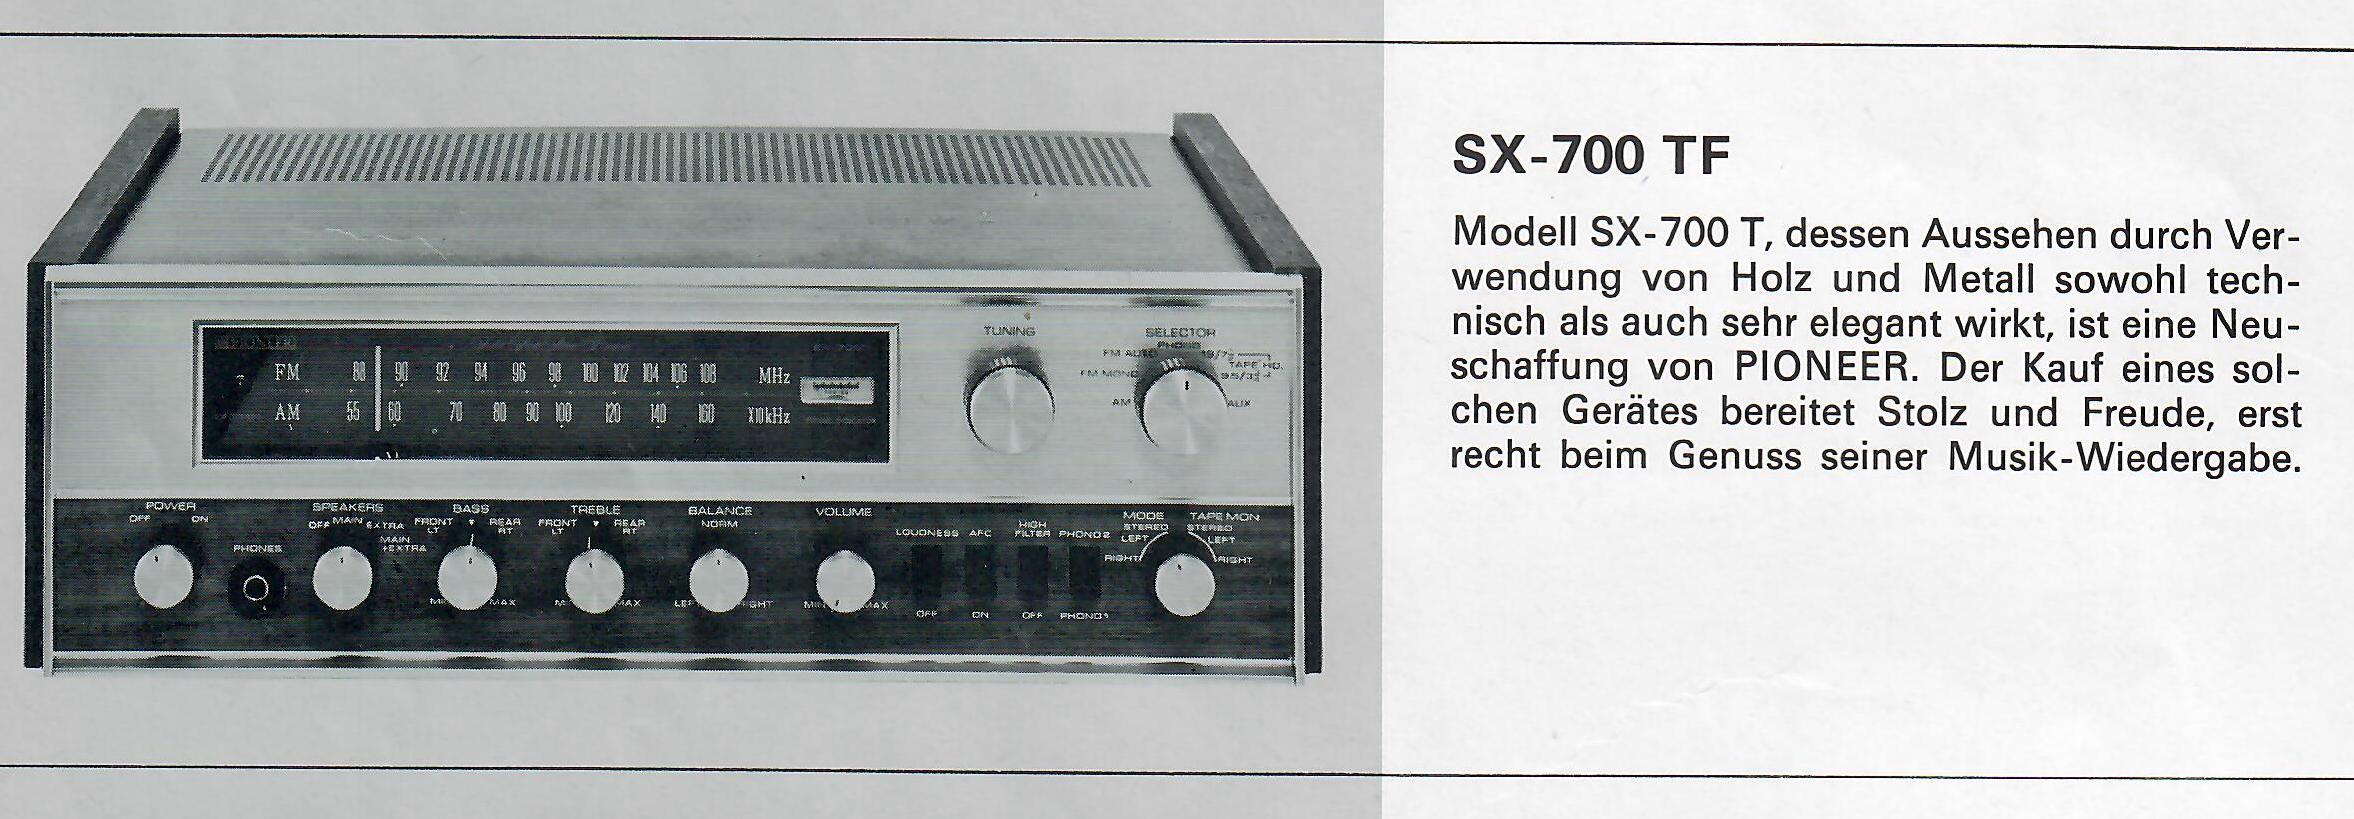 Pioneer SX-700 TF-Prospekt-1.jpg